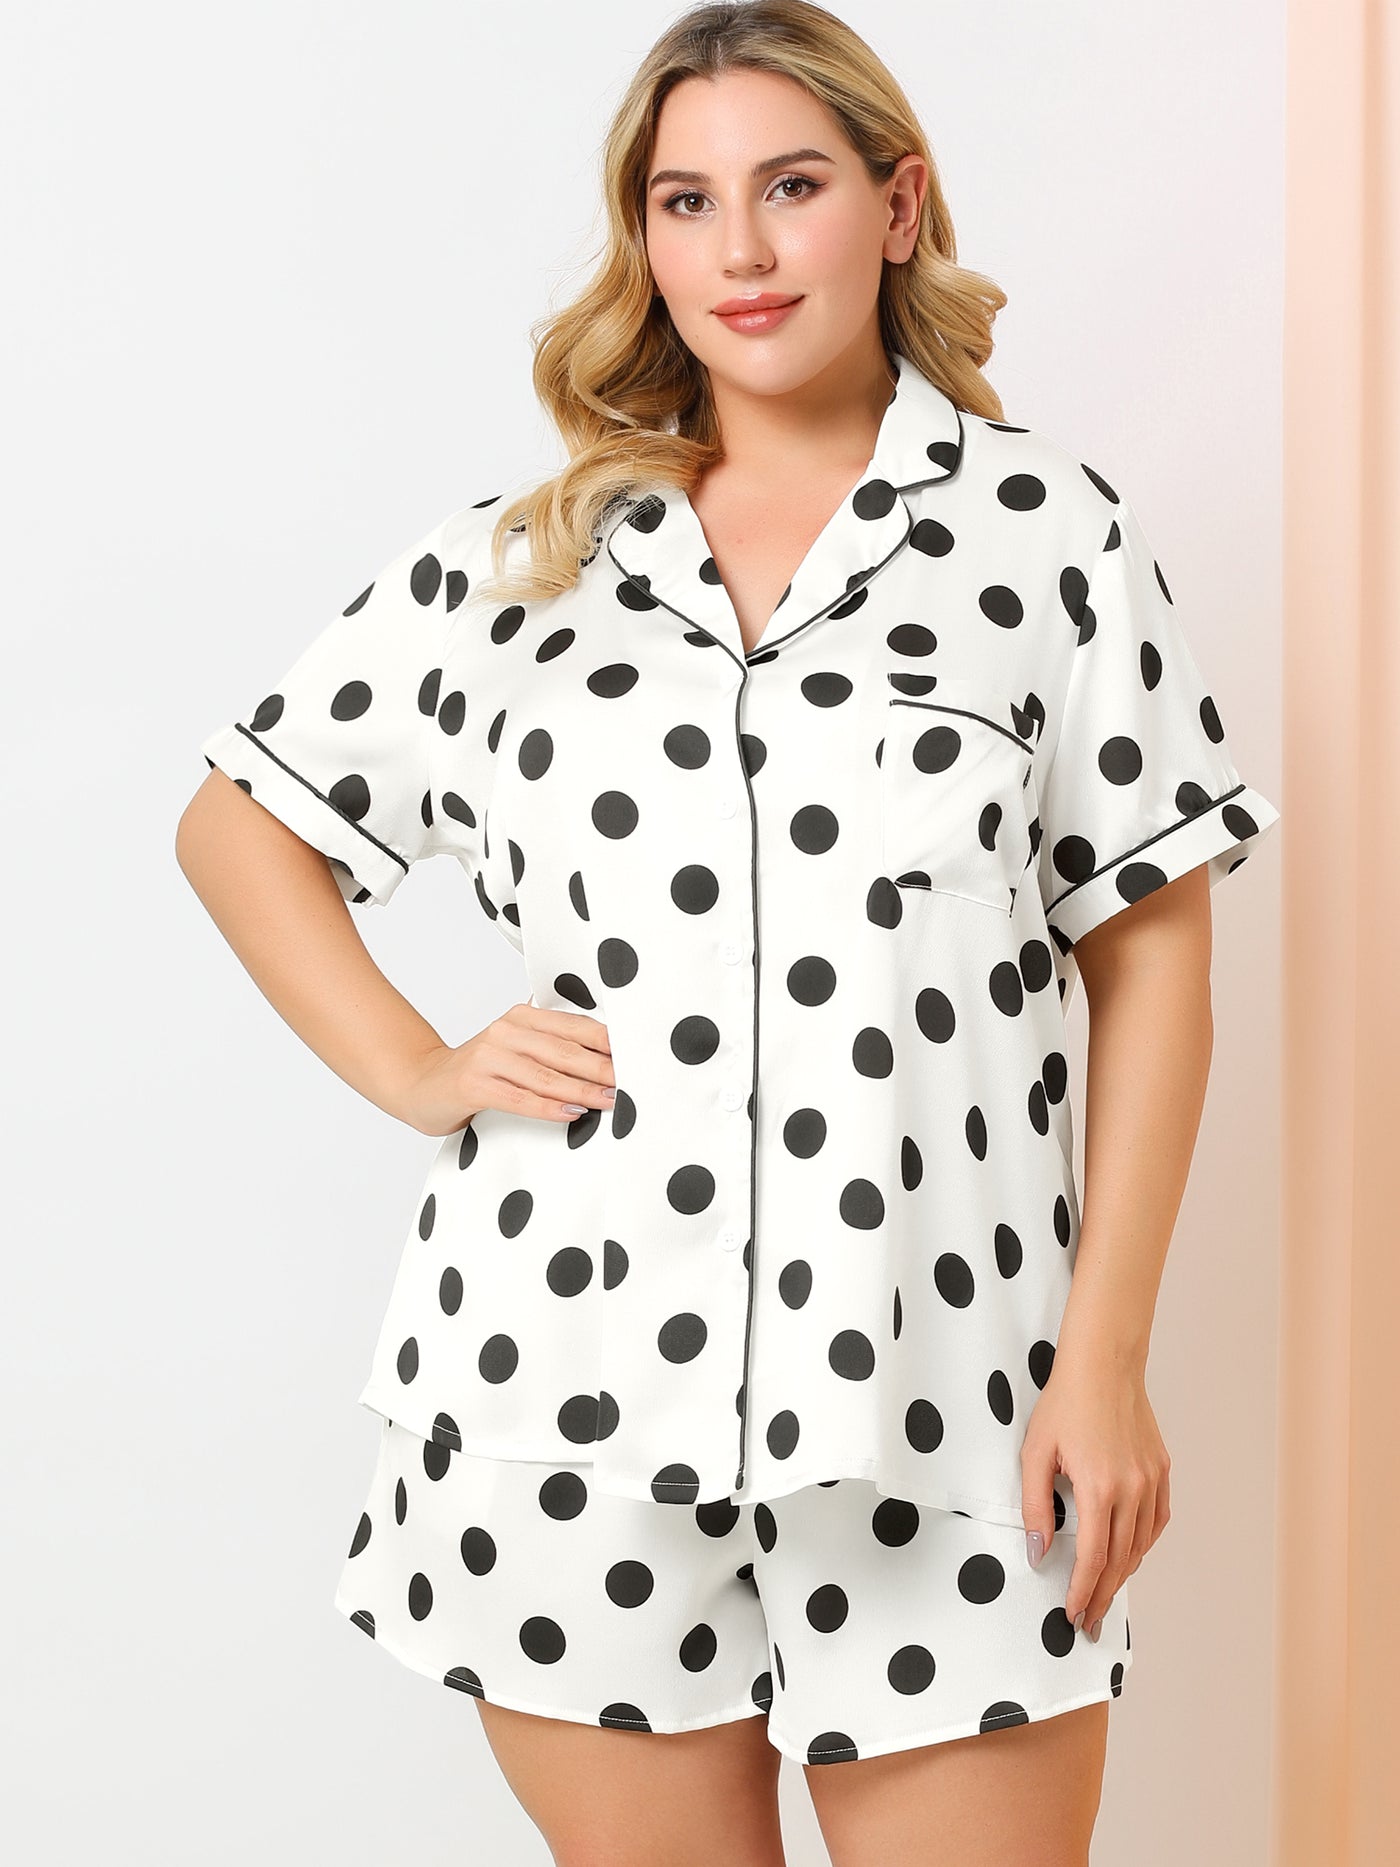 Bublédon Women's Plus Size Pajama Set Short Sleeve Bottoms Polka Dots Shirt